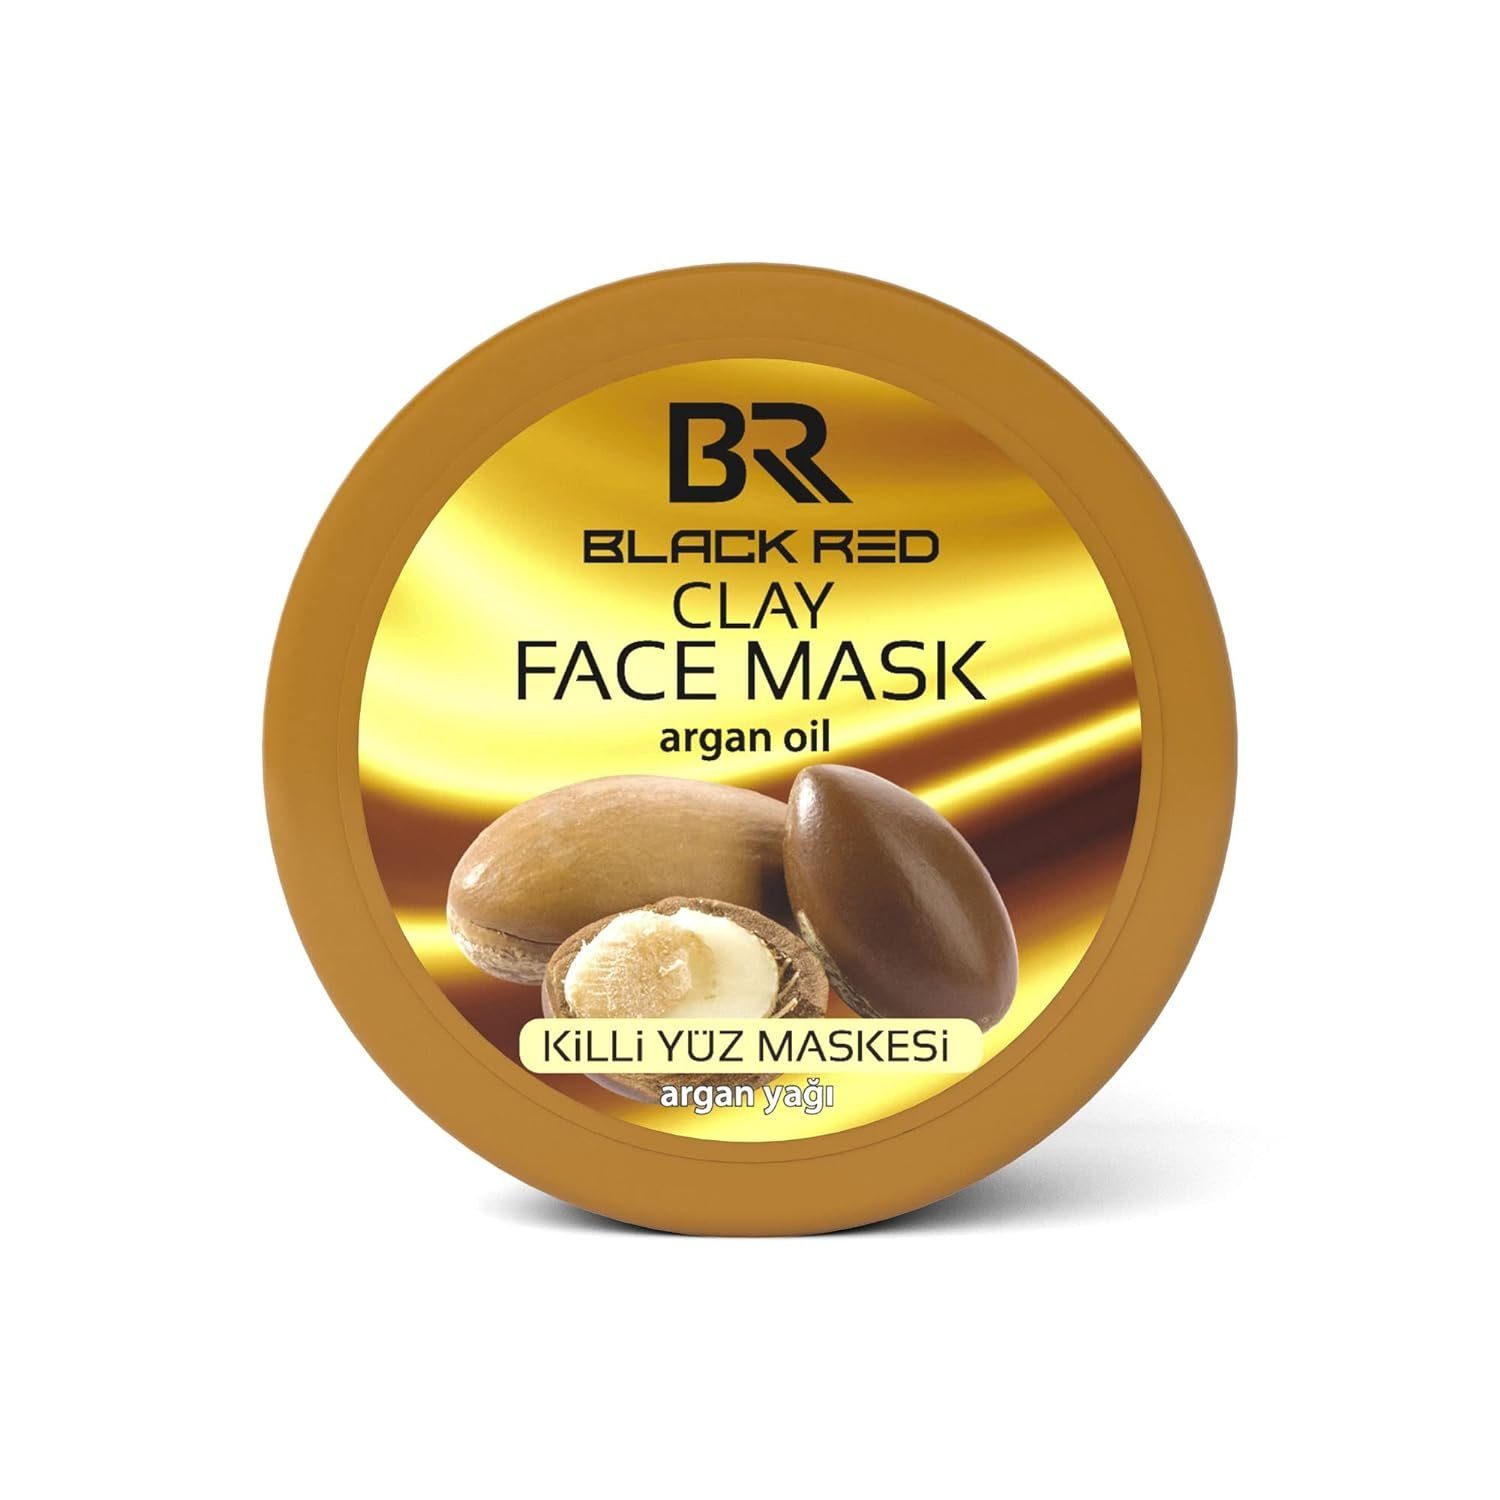 Oil Kozmetik Black Mask Clay & Face Argan Red Dora 400g Gesichtsmaske